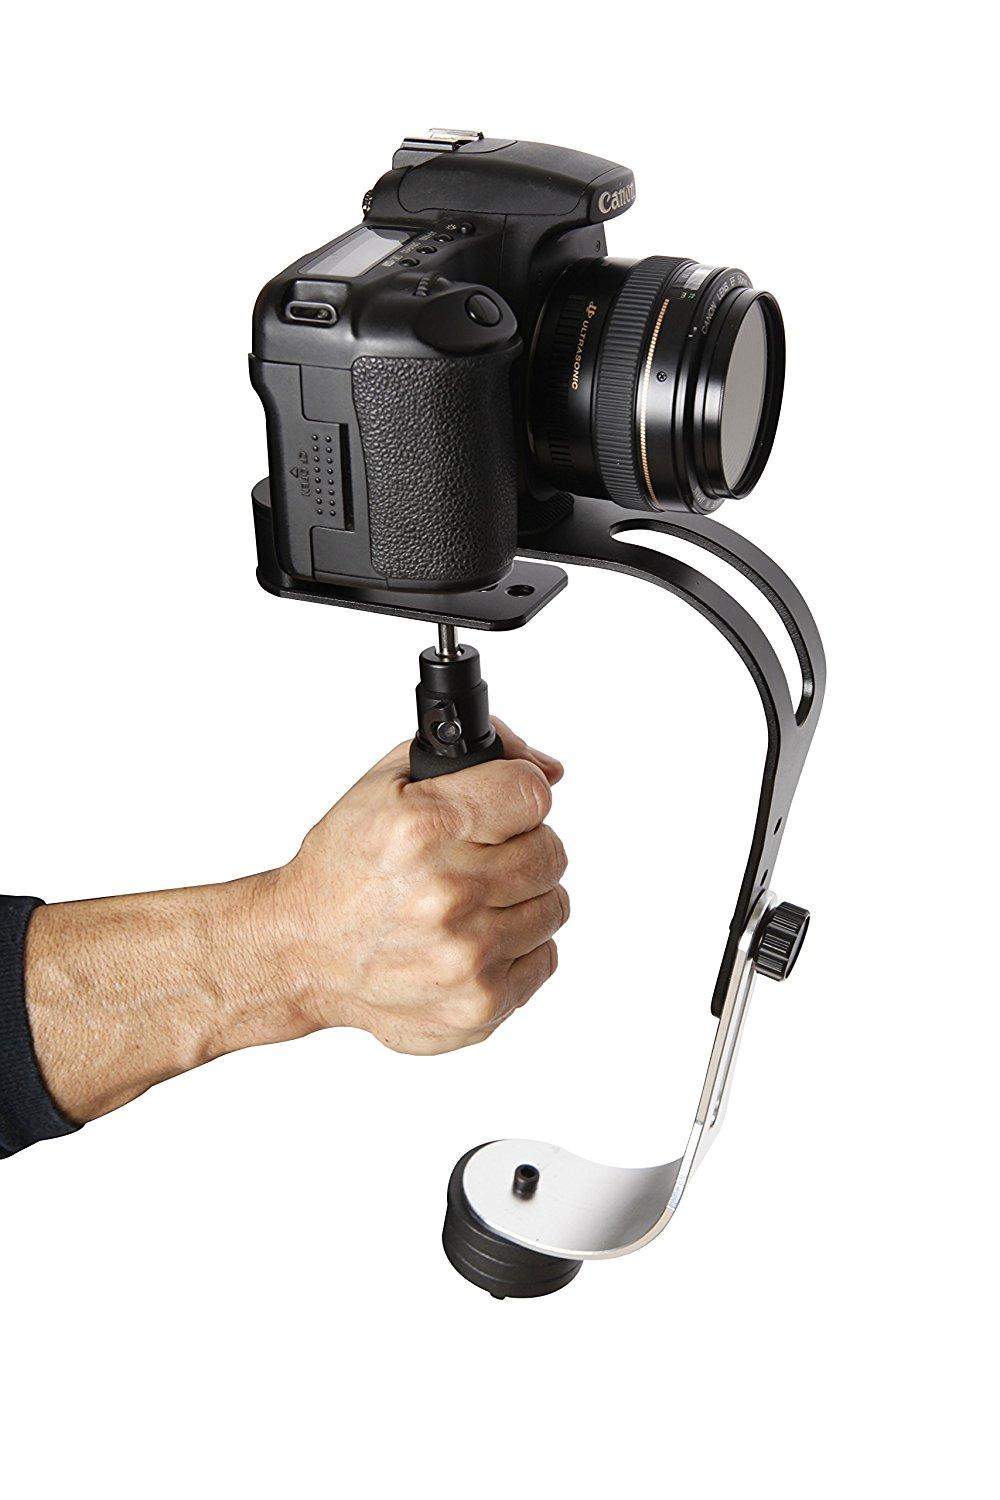 Resmi Roxant Pro Penstabil Kamera Video Edisi Terbatas (Tengah Malam Hitam) dengan Profil Rendah Handle untuk GoPro, Smartphone, canon, Nikon-atau Kamera Hingga 2.1 Lbs.